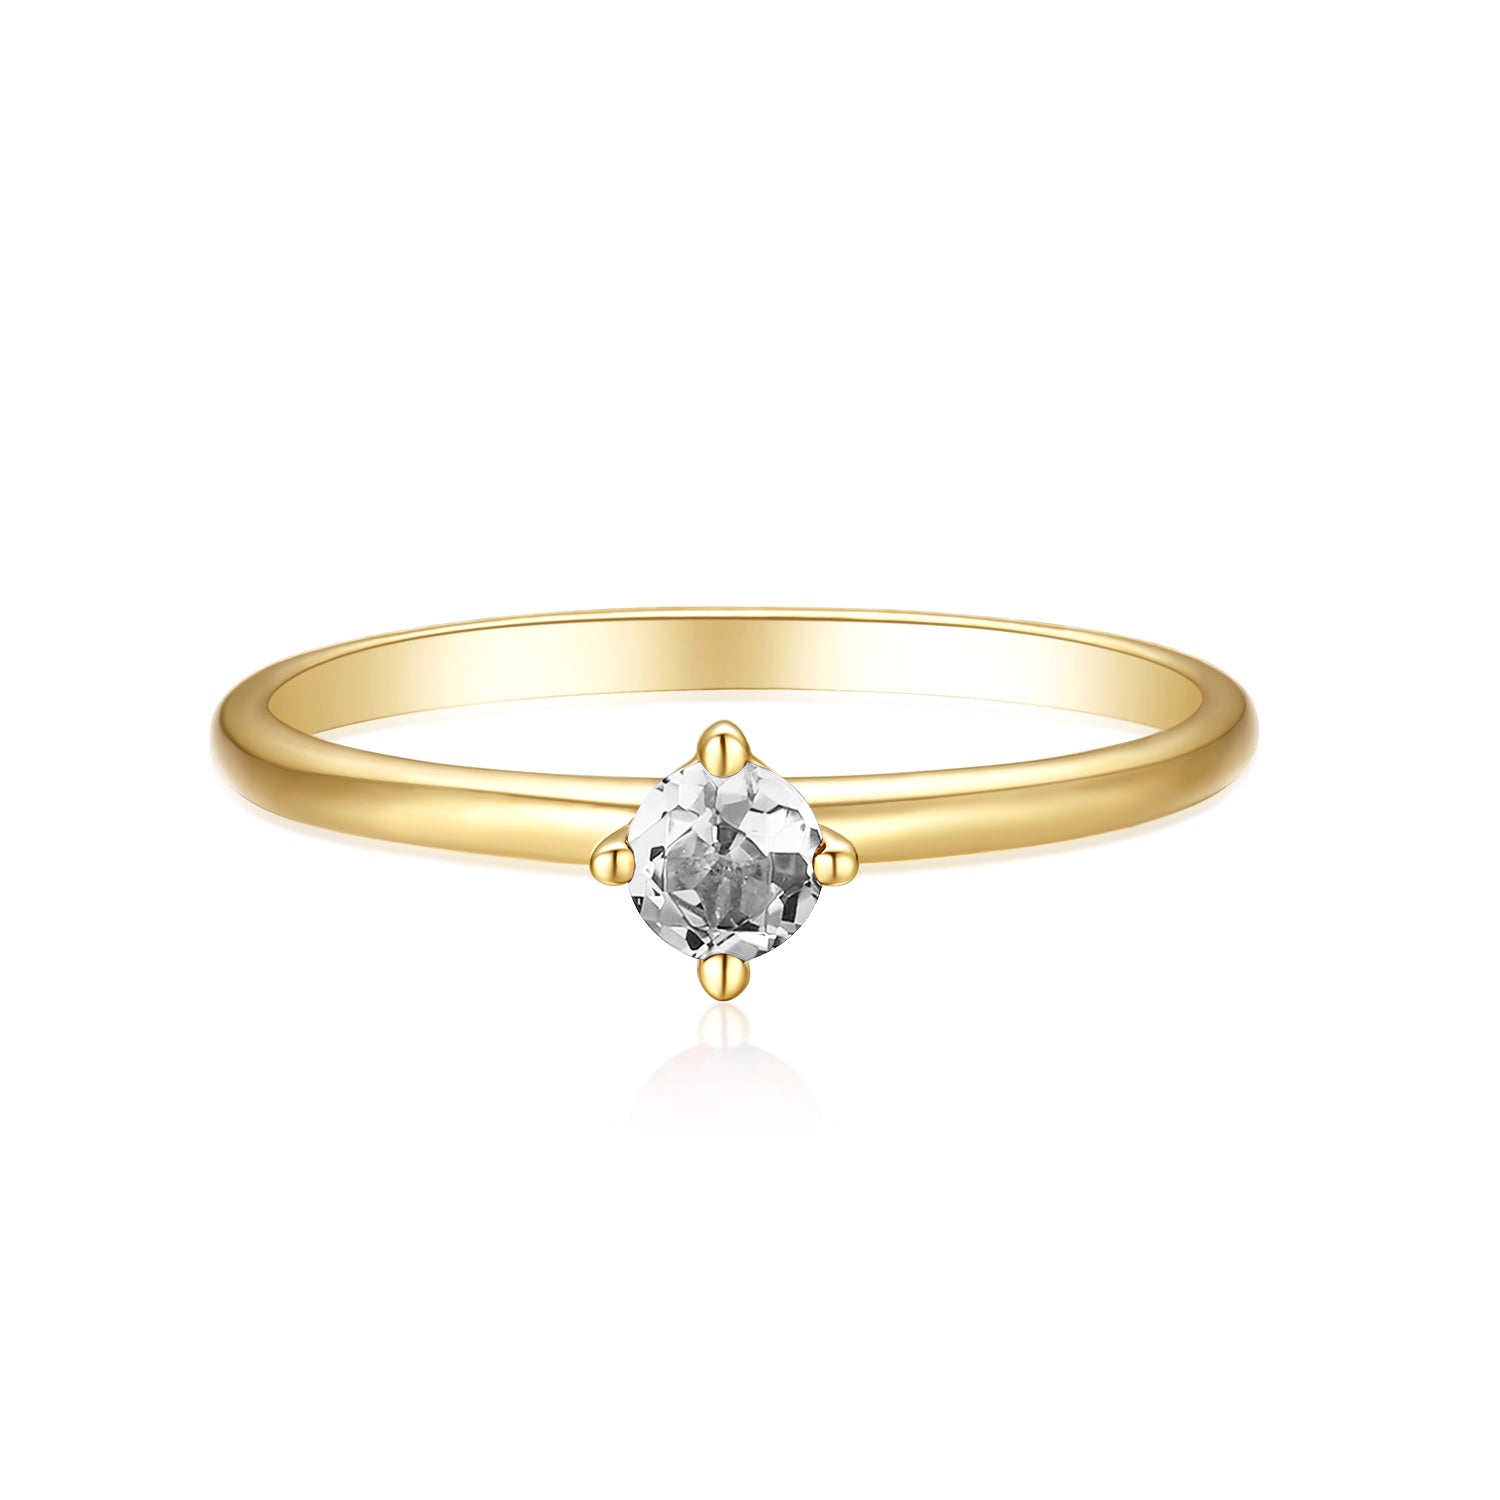 Mini Heart Birthstone Ring (Gold)